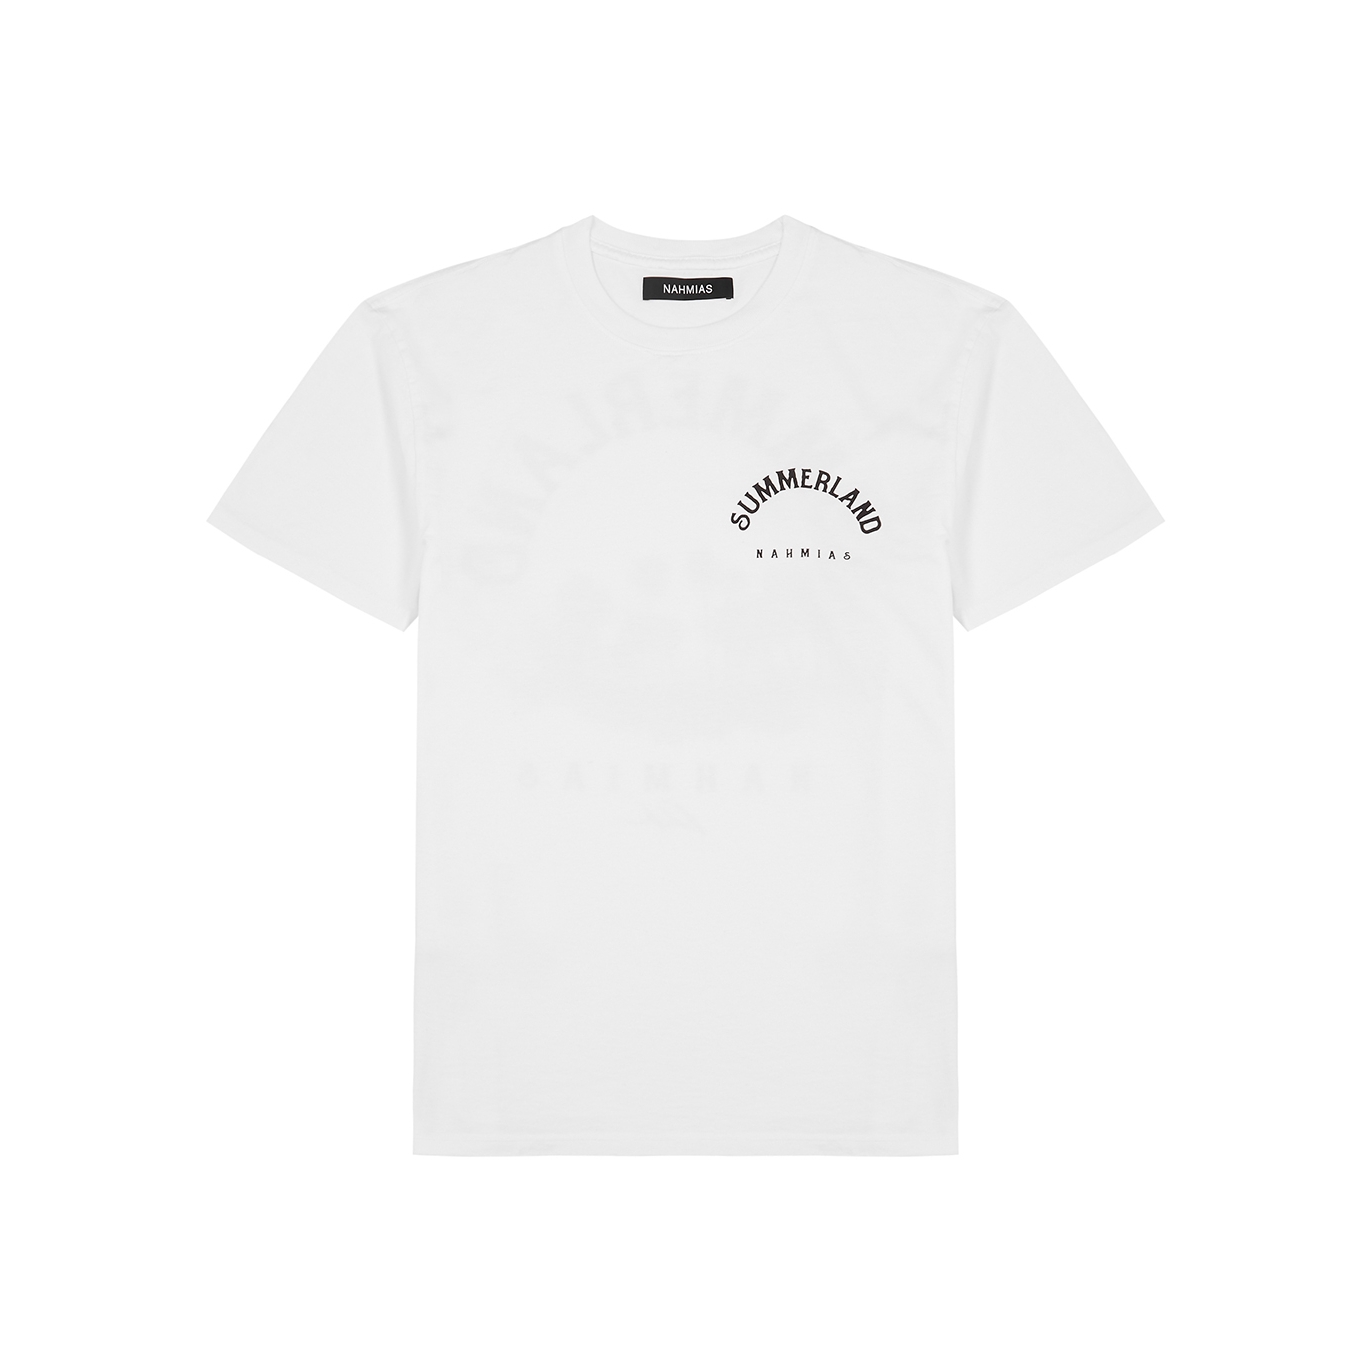 Nahmias Sunset Printed Cotton T-shirt - White - M